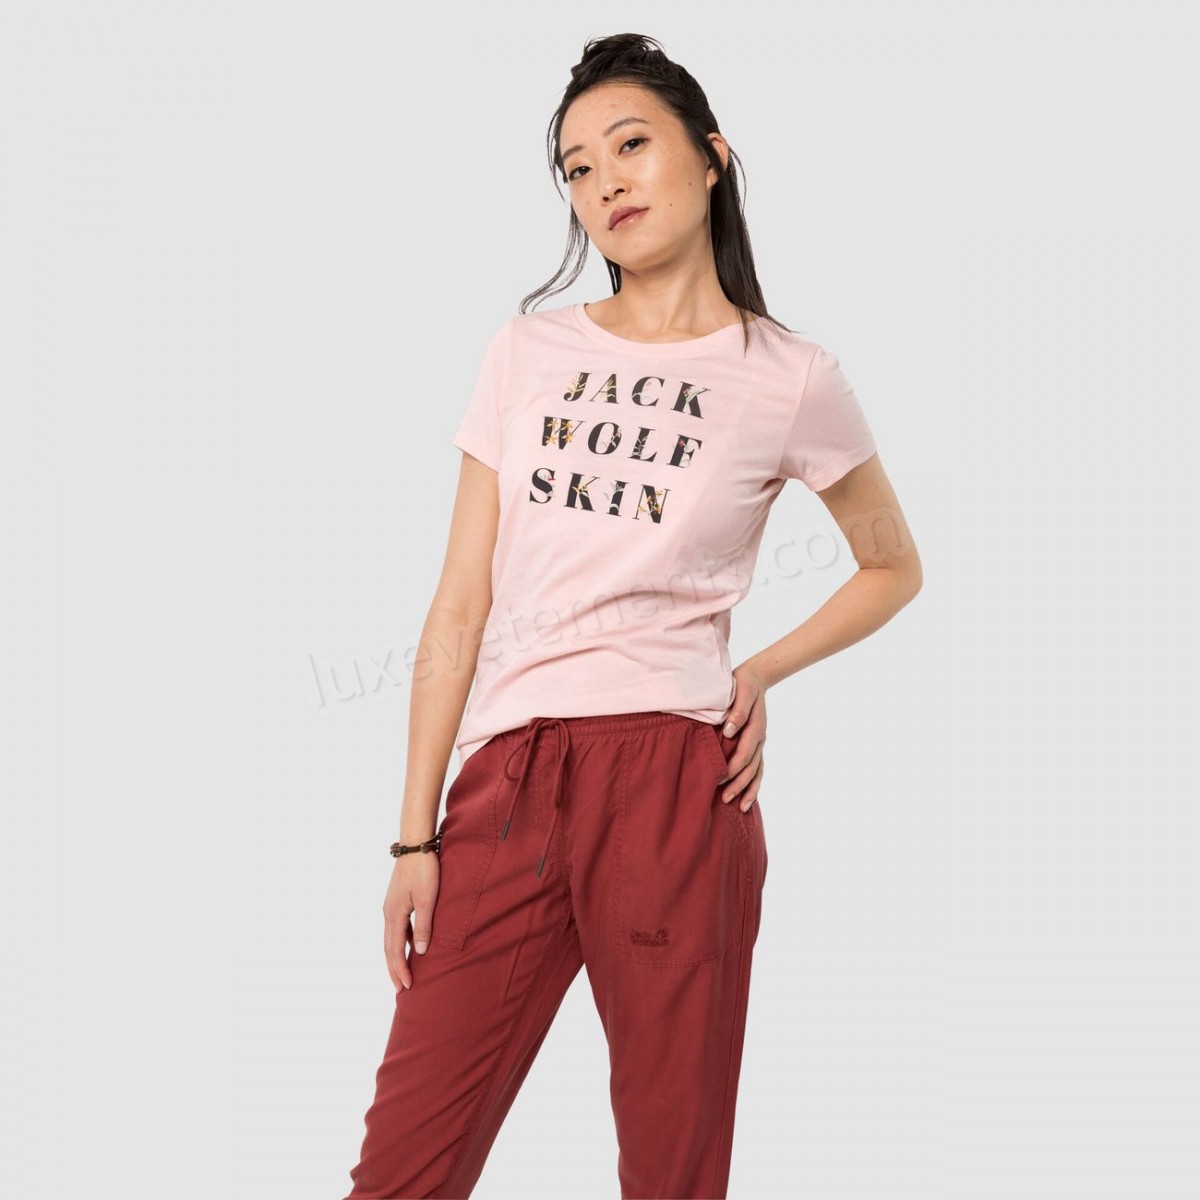 Jack Wolfskin-Randonnée pédestre femme JACK WOLFSKIN T-shirt Femme Jack Wolfskin Flower Letter T W Blush Pink Vente en ligne - -0